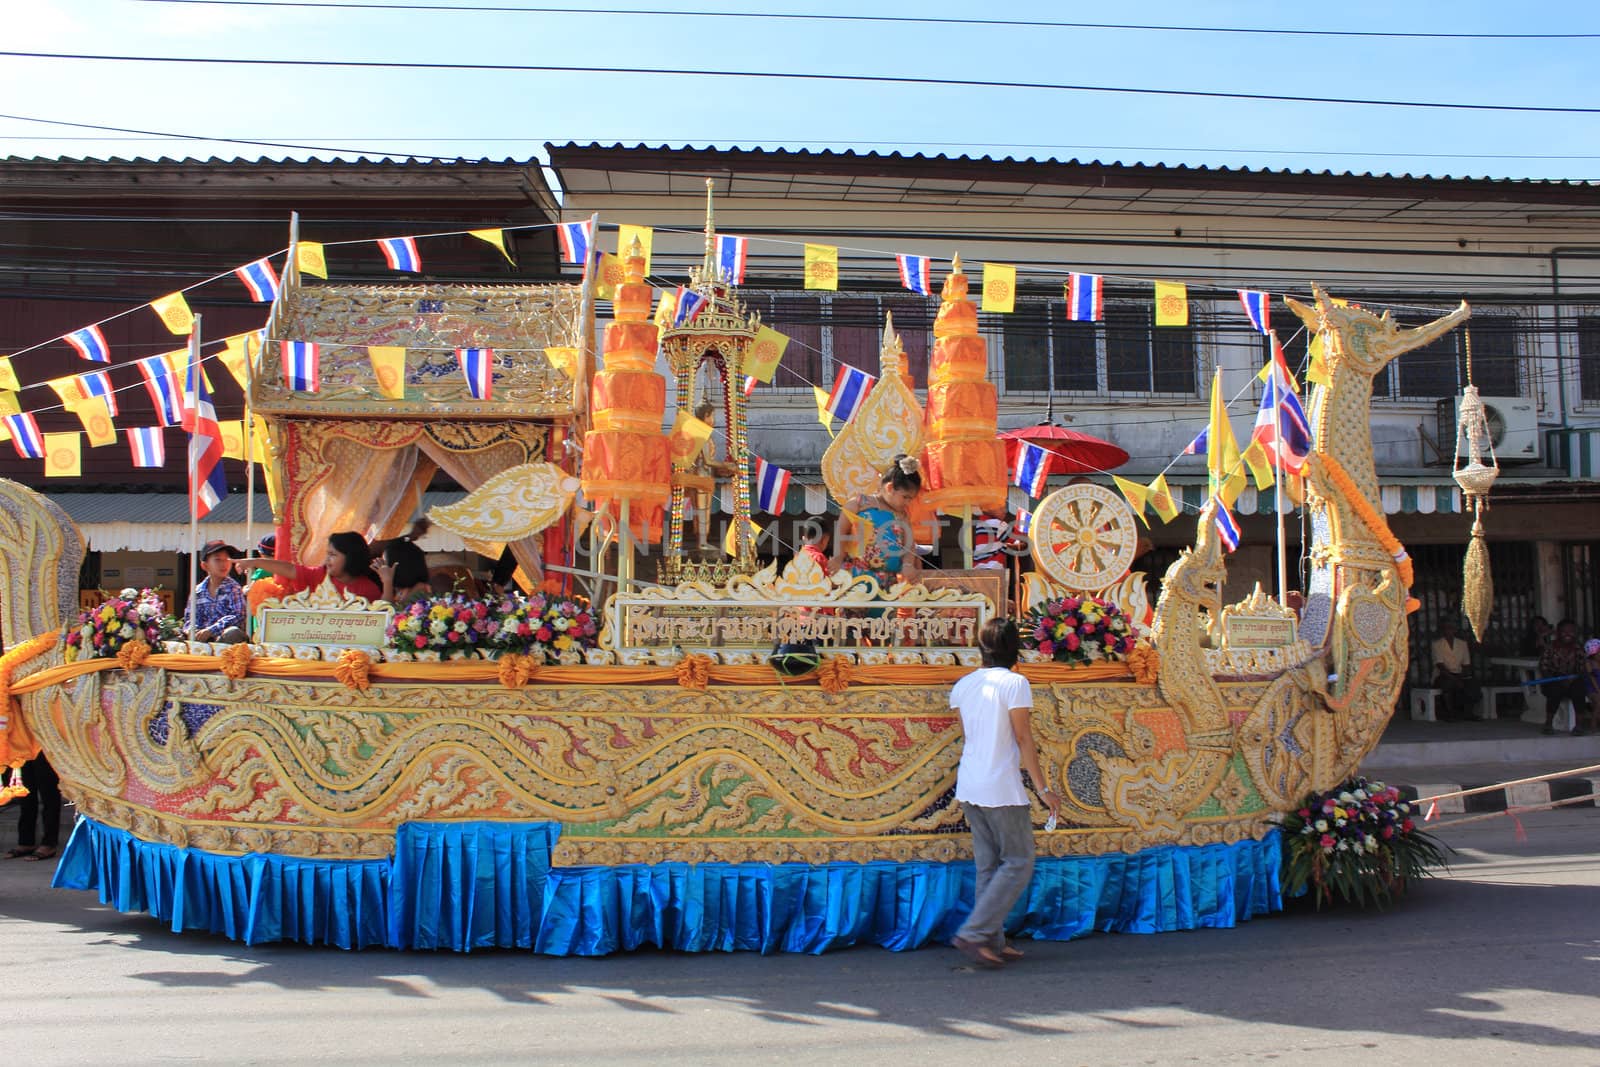 Chak Phra Festivals by olovedog